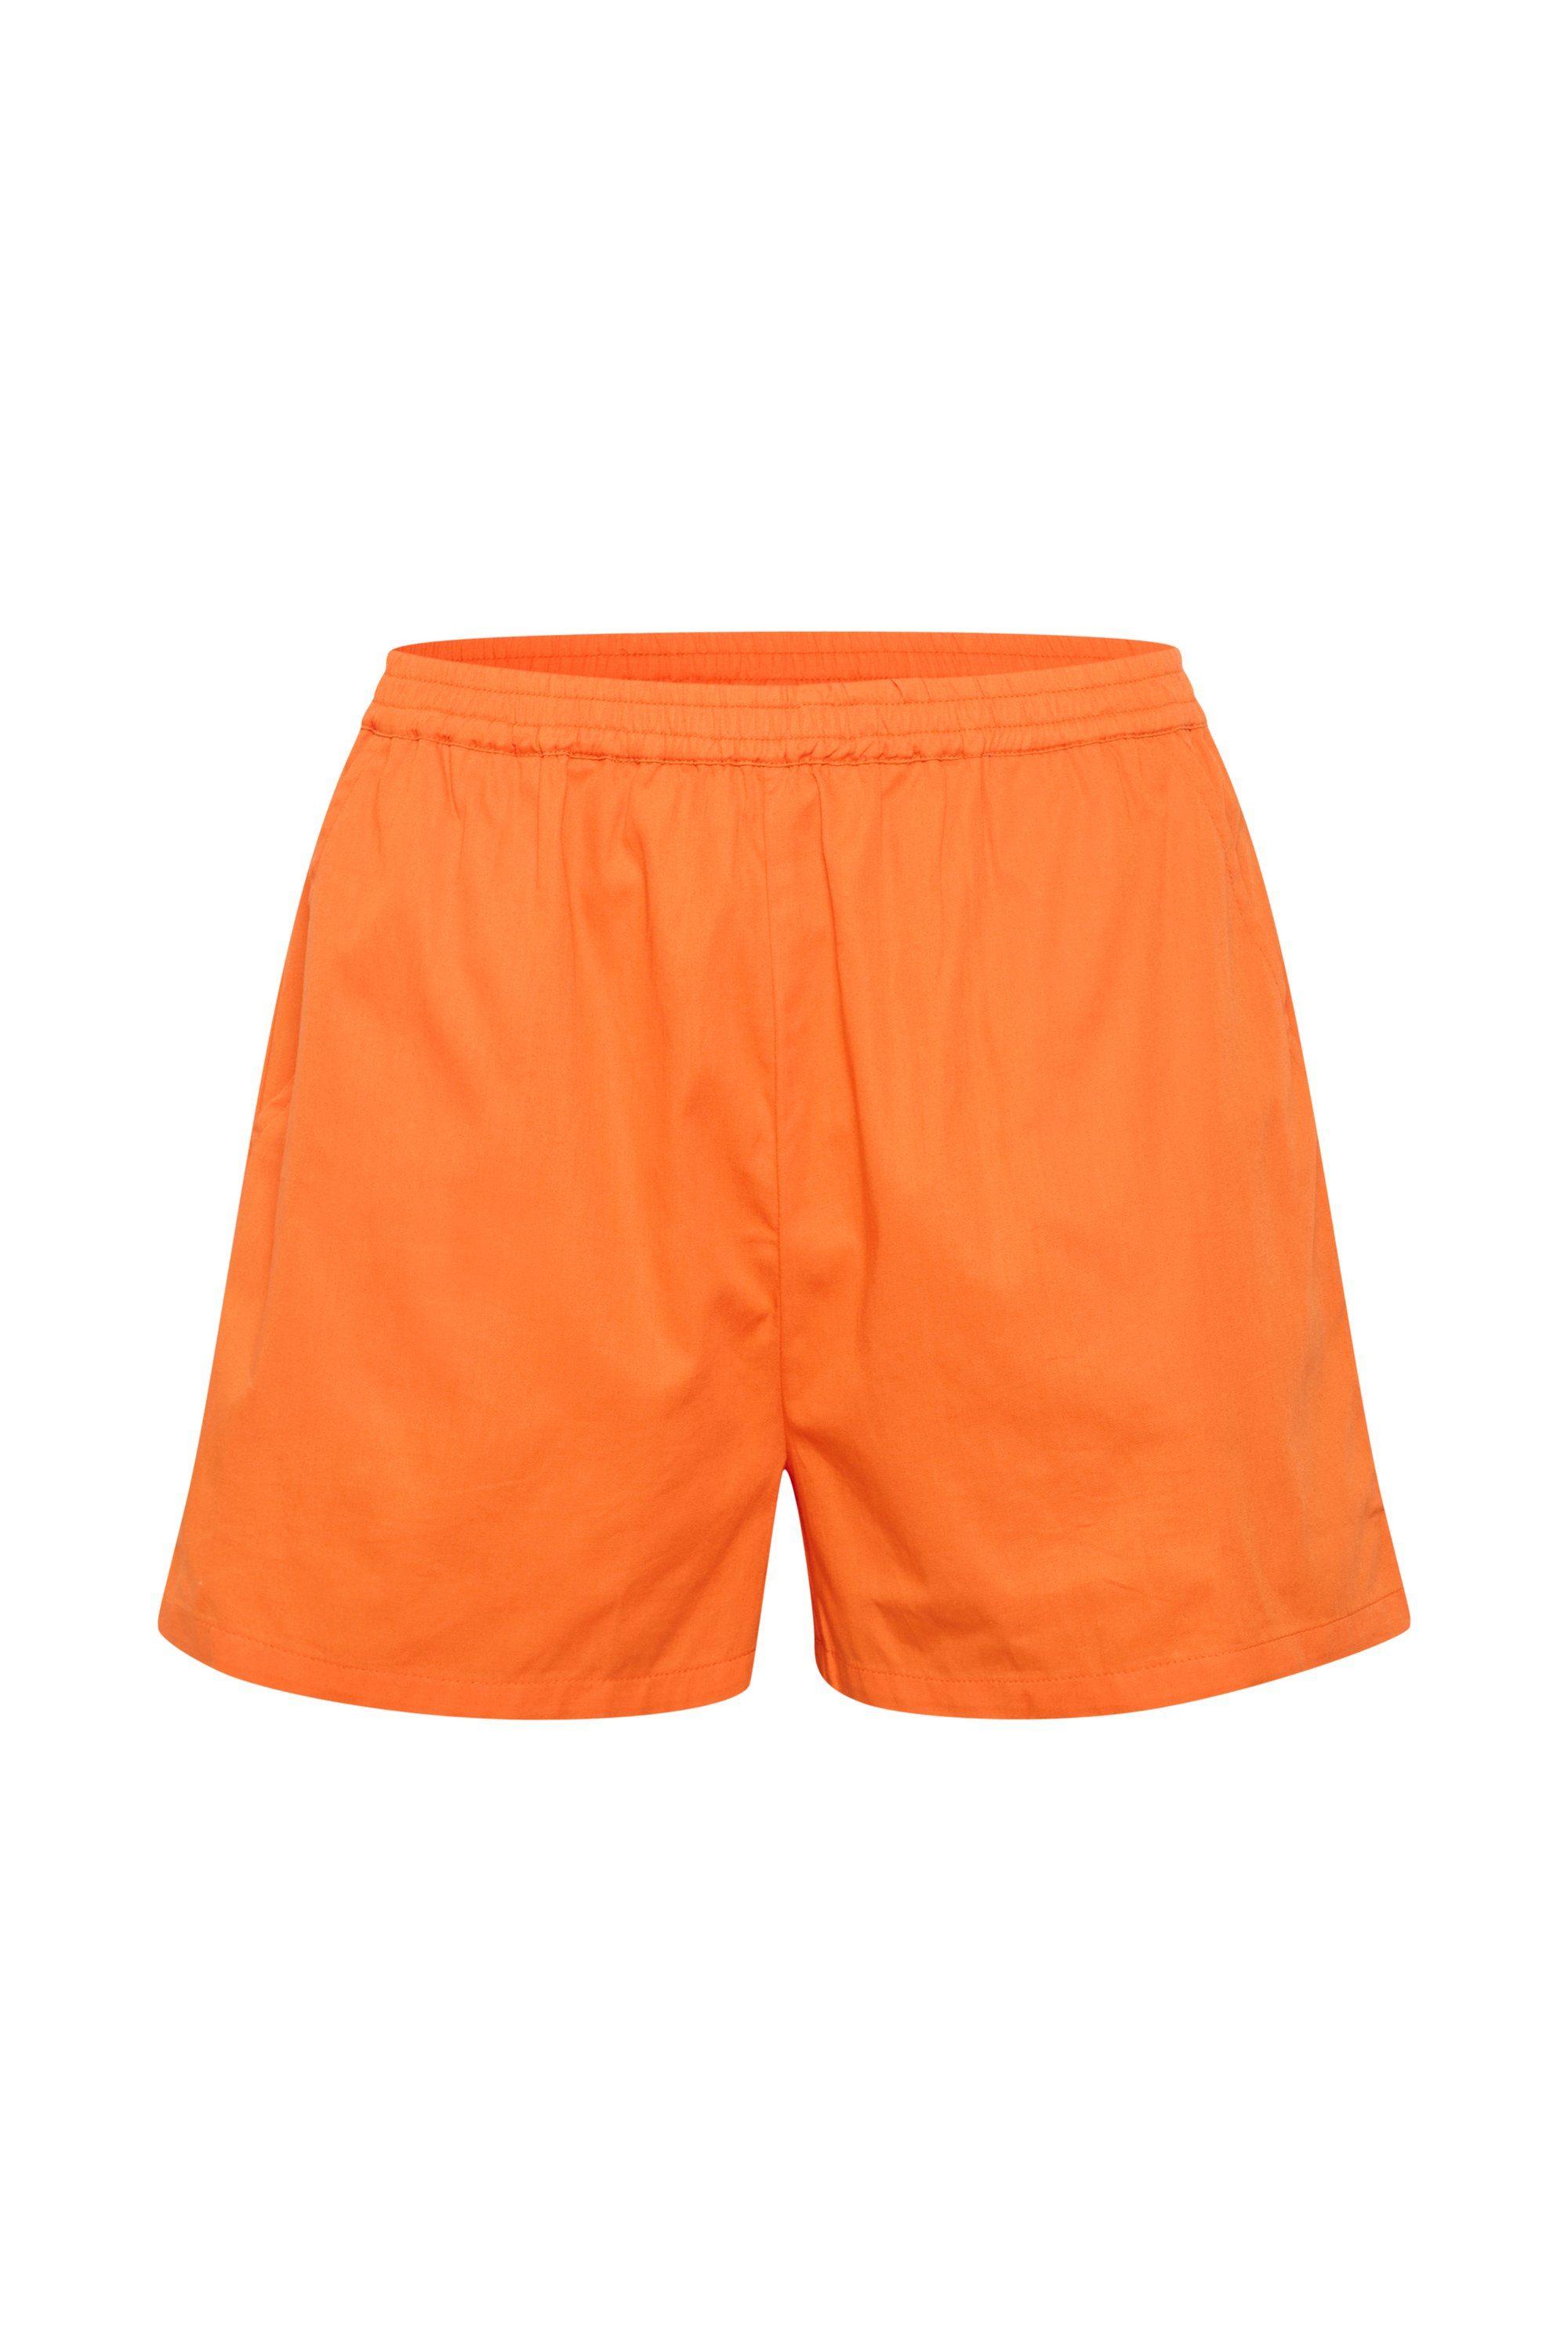 Saint Tropez Shorts Shorts UfloraSZ Orange Peel